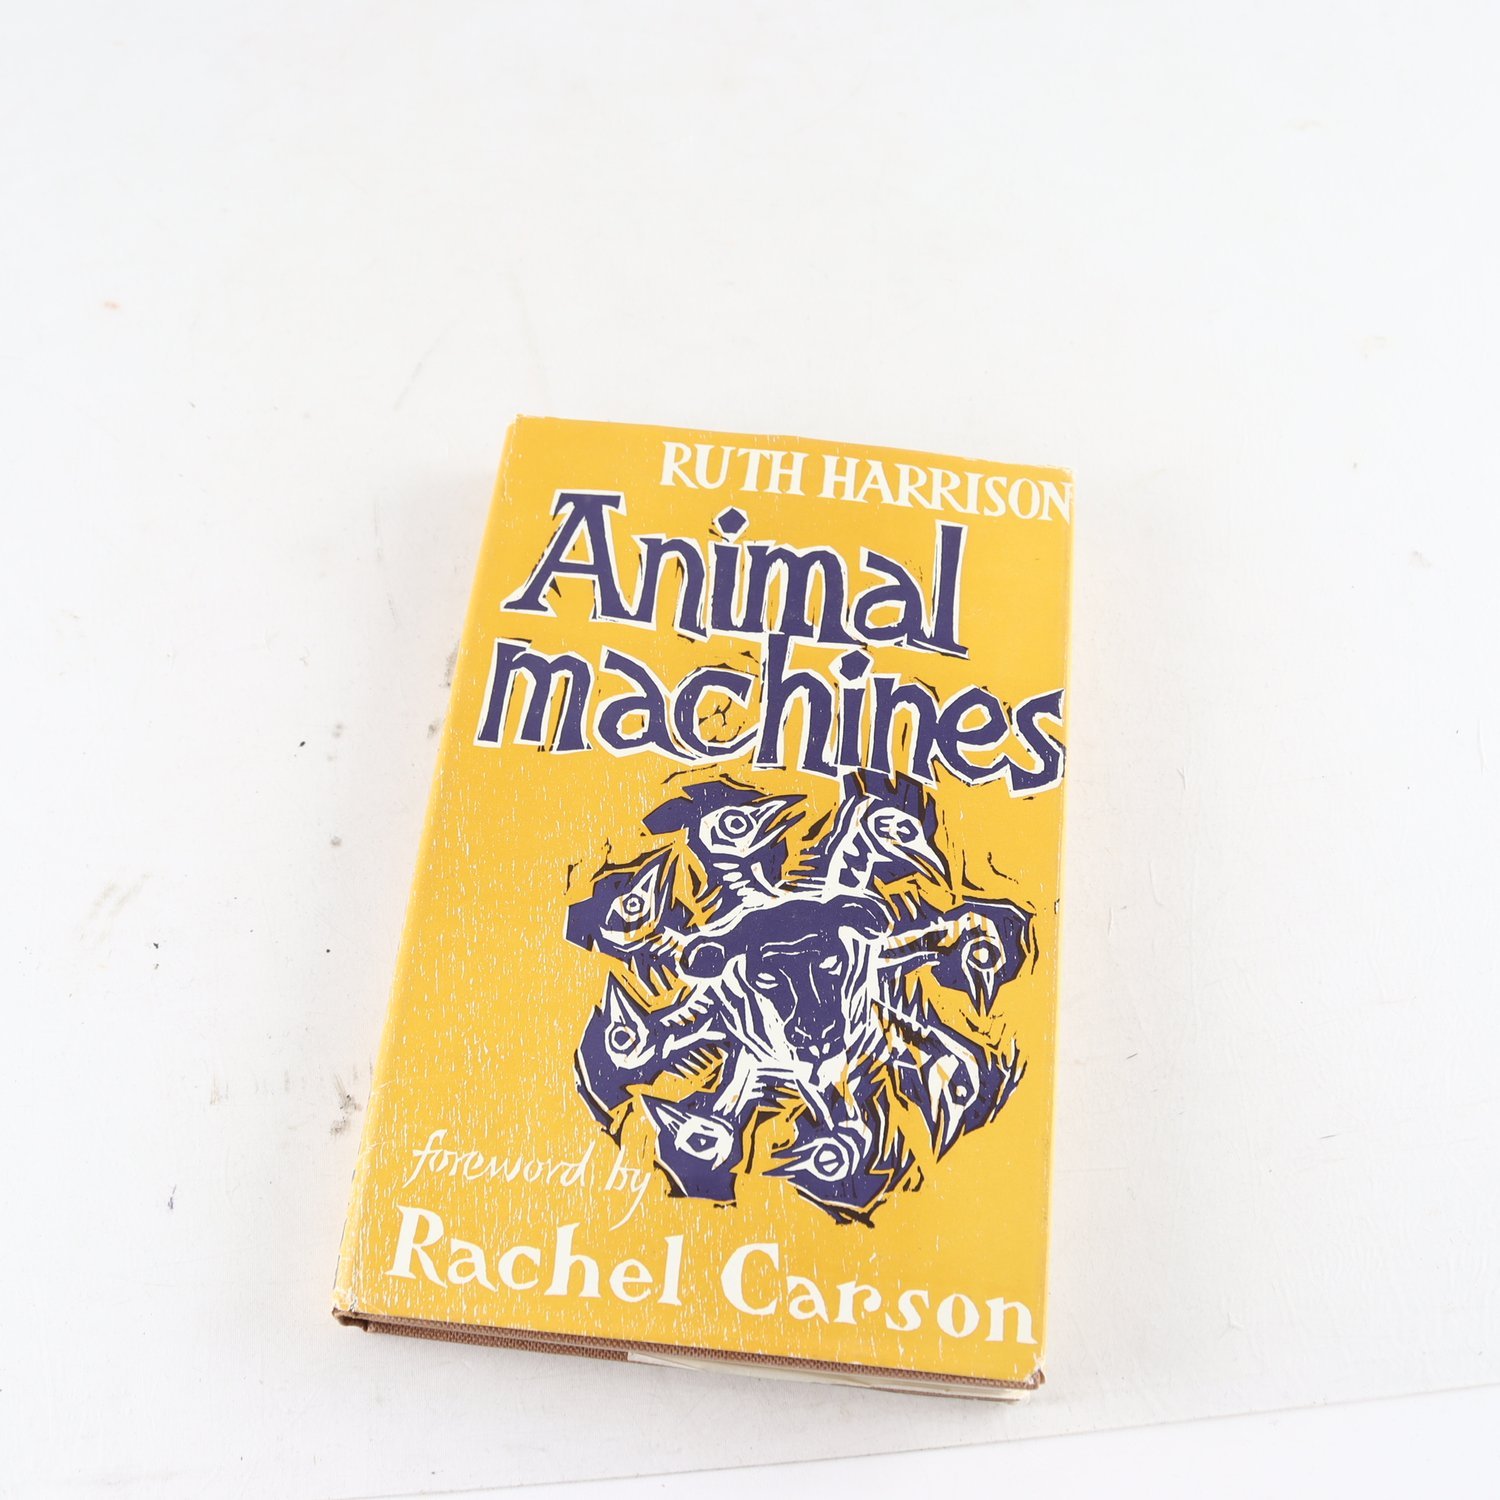 Ruth Harrison, Animal Machines, Foreword by Rachel Carson